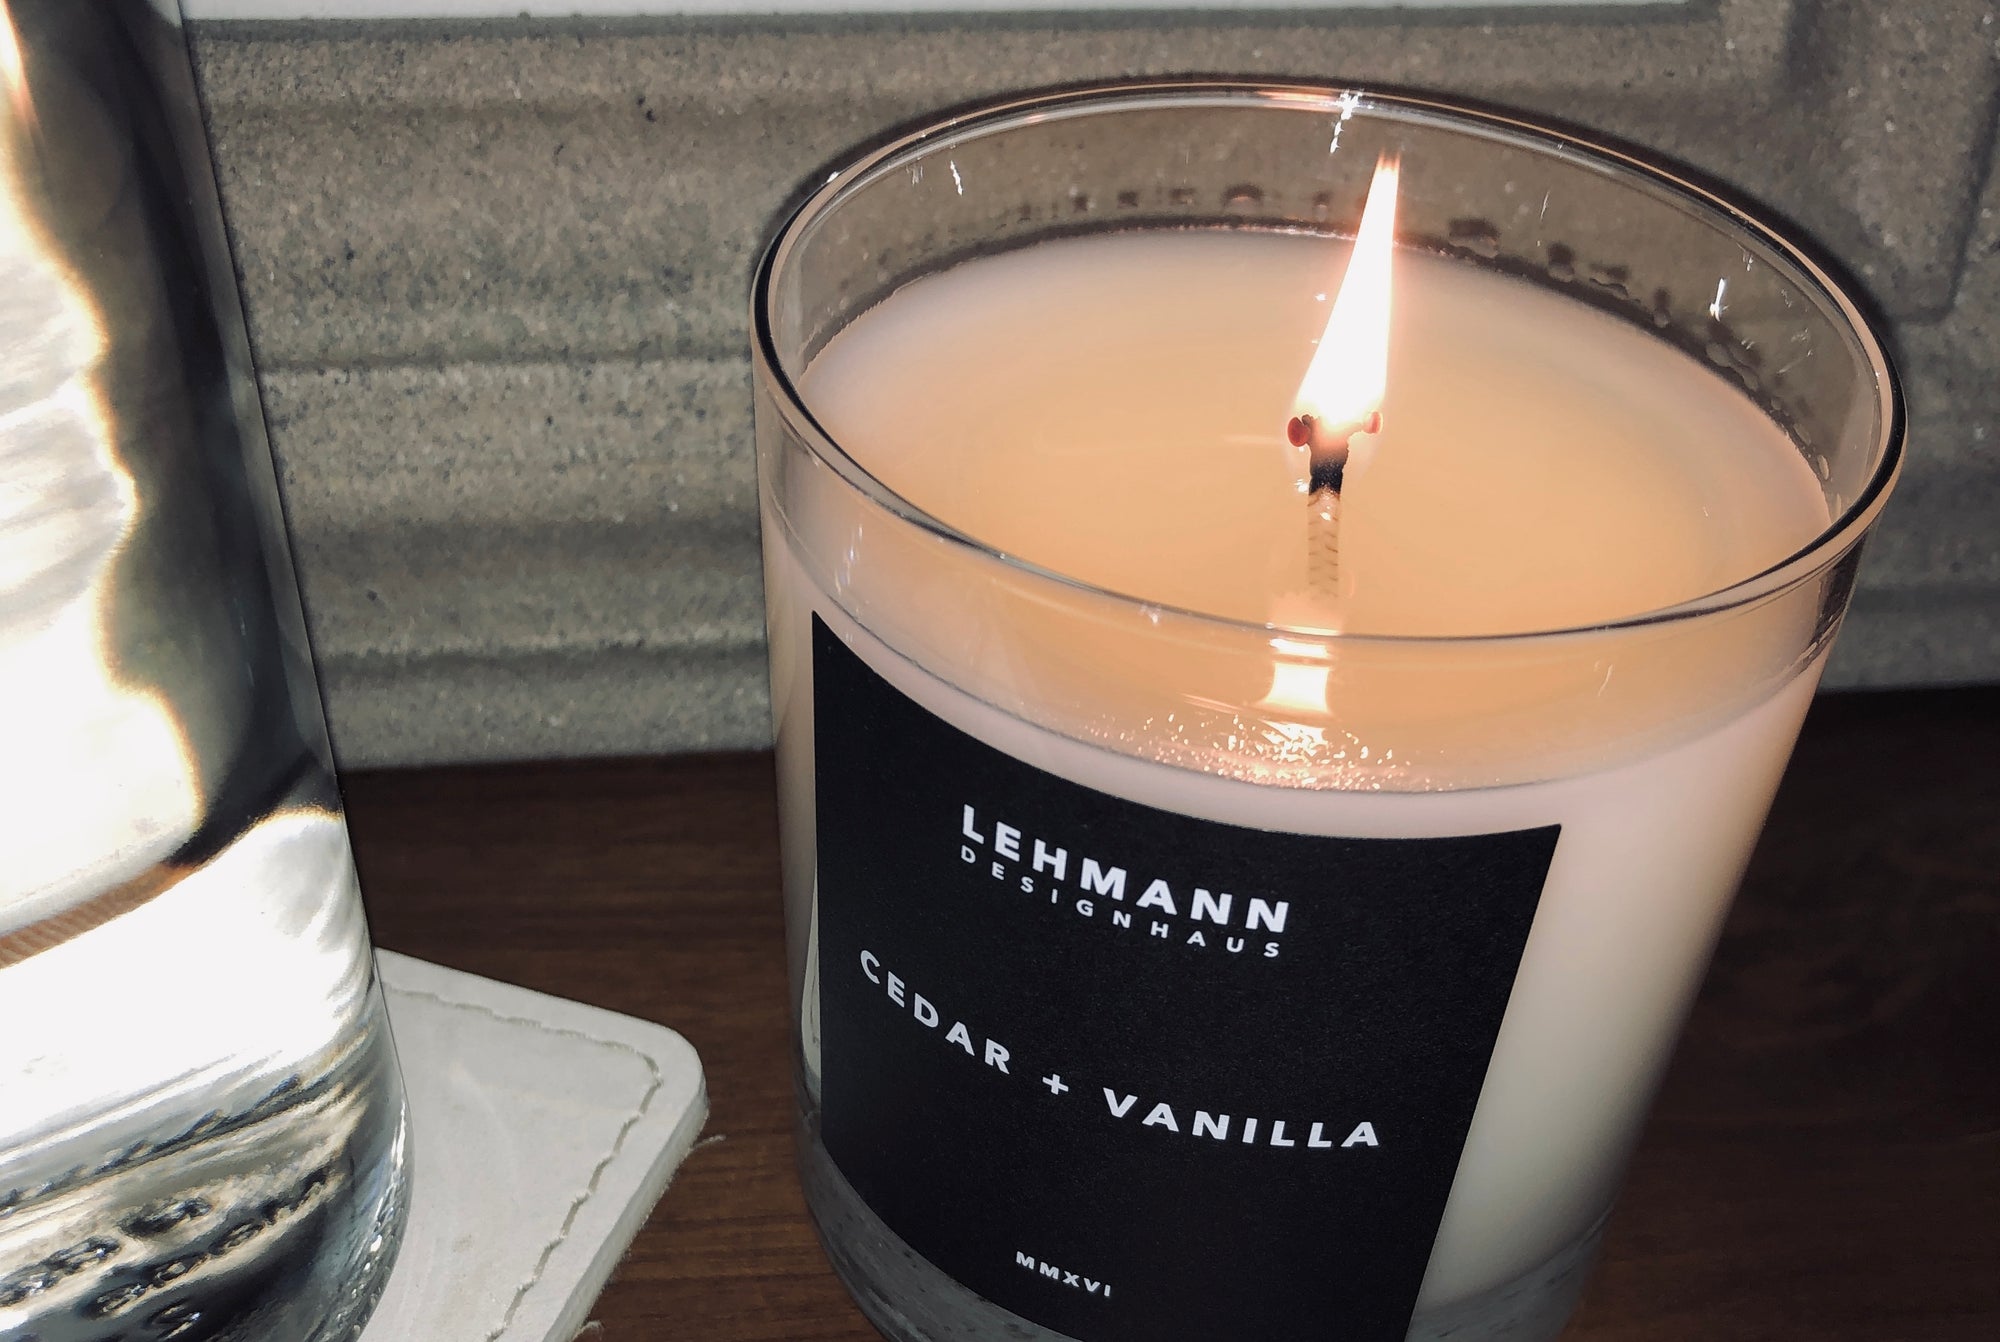 Cedar + Vanilla Classic Candle burning